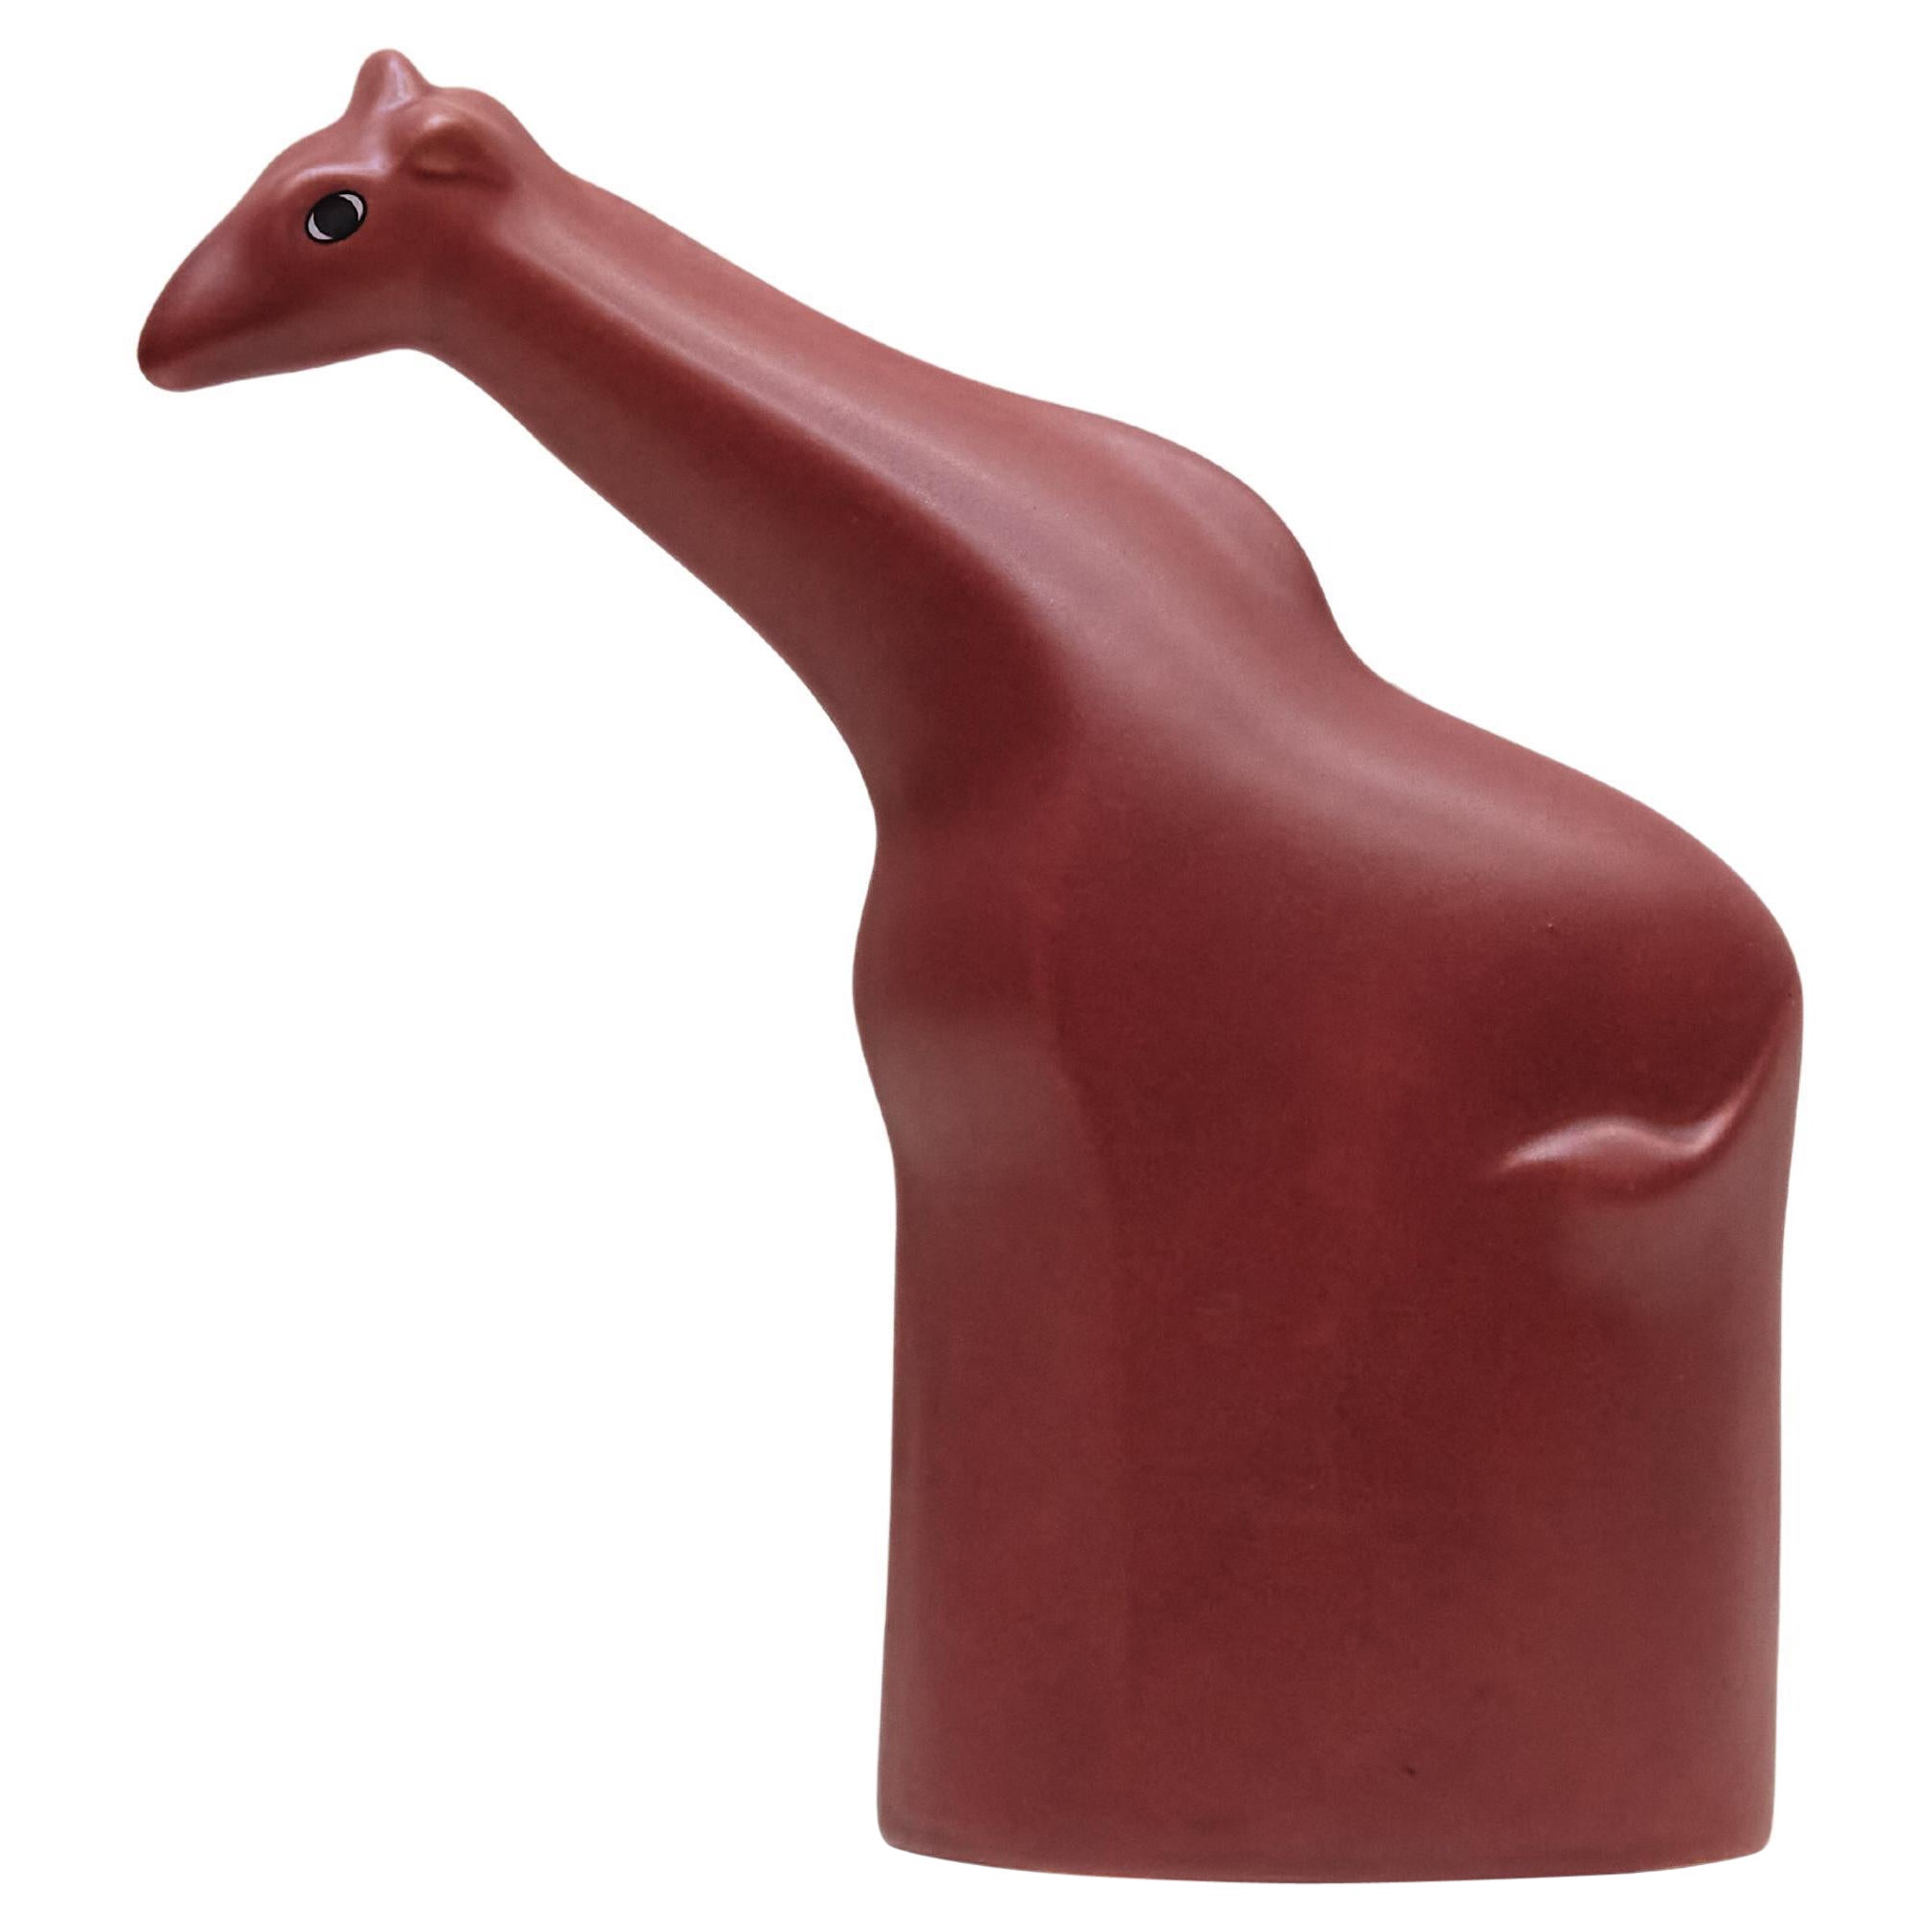 Howard Smith Ceramic 'Giraffe Harry' for Arabian, circa 1990